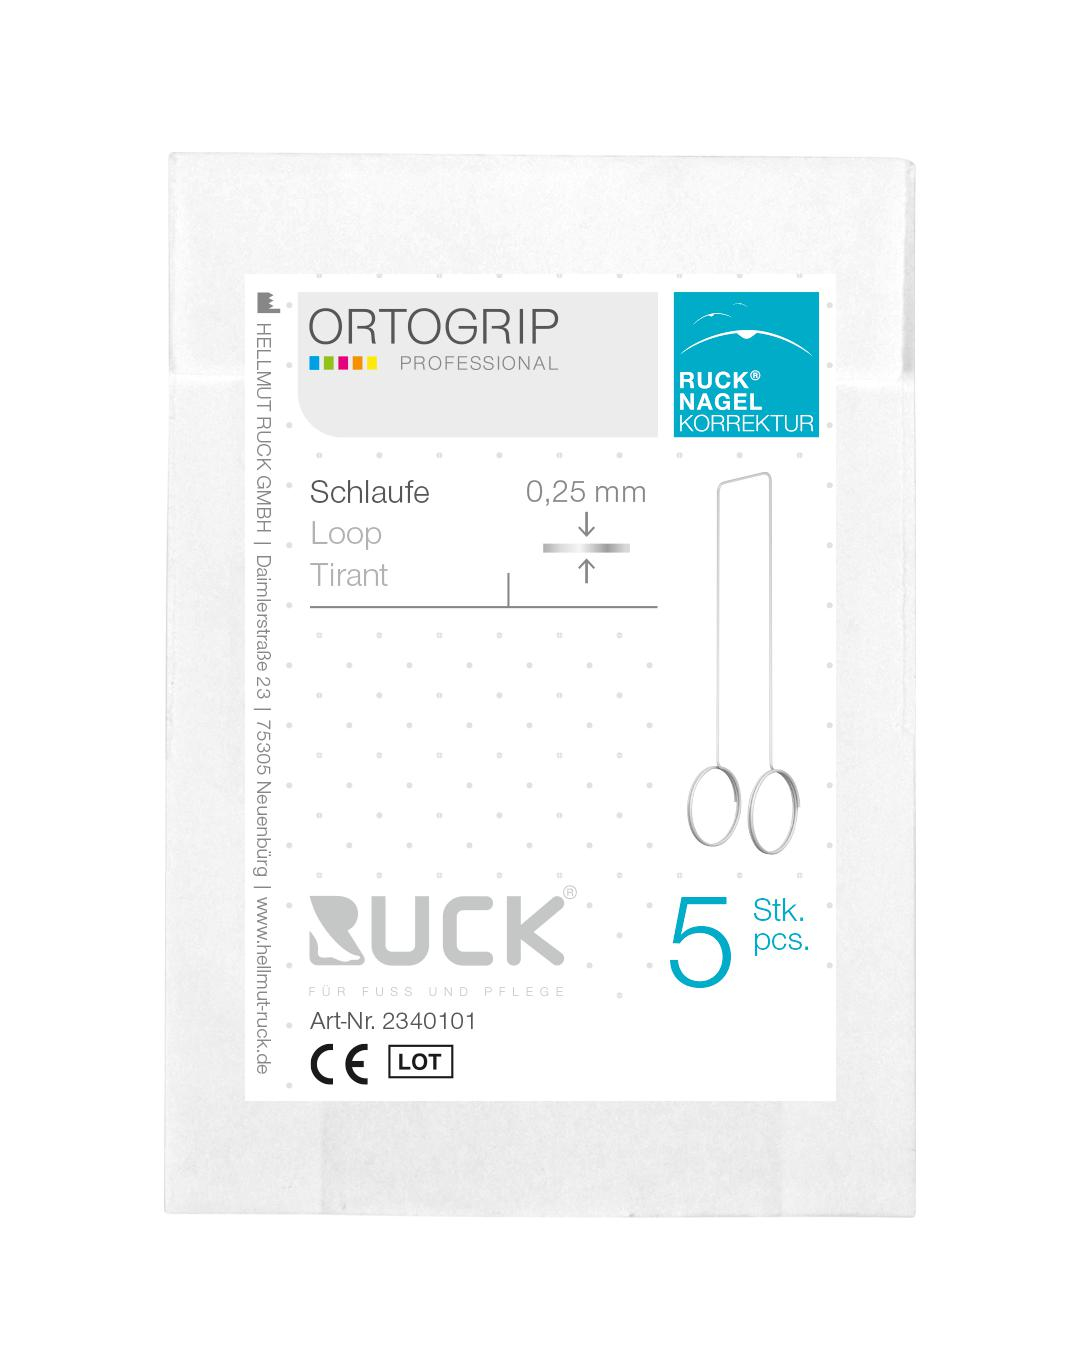 RUCK ORTOGRIP professional Schlaufe 0,25 mm